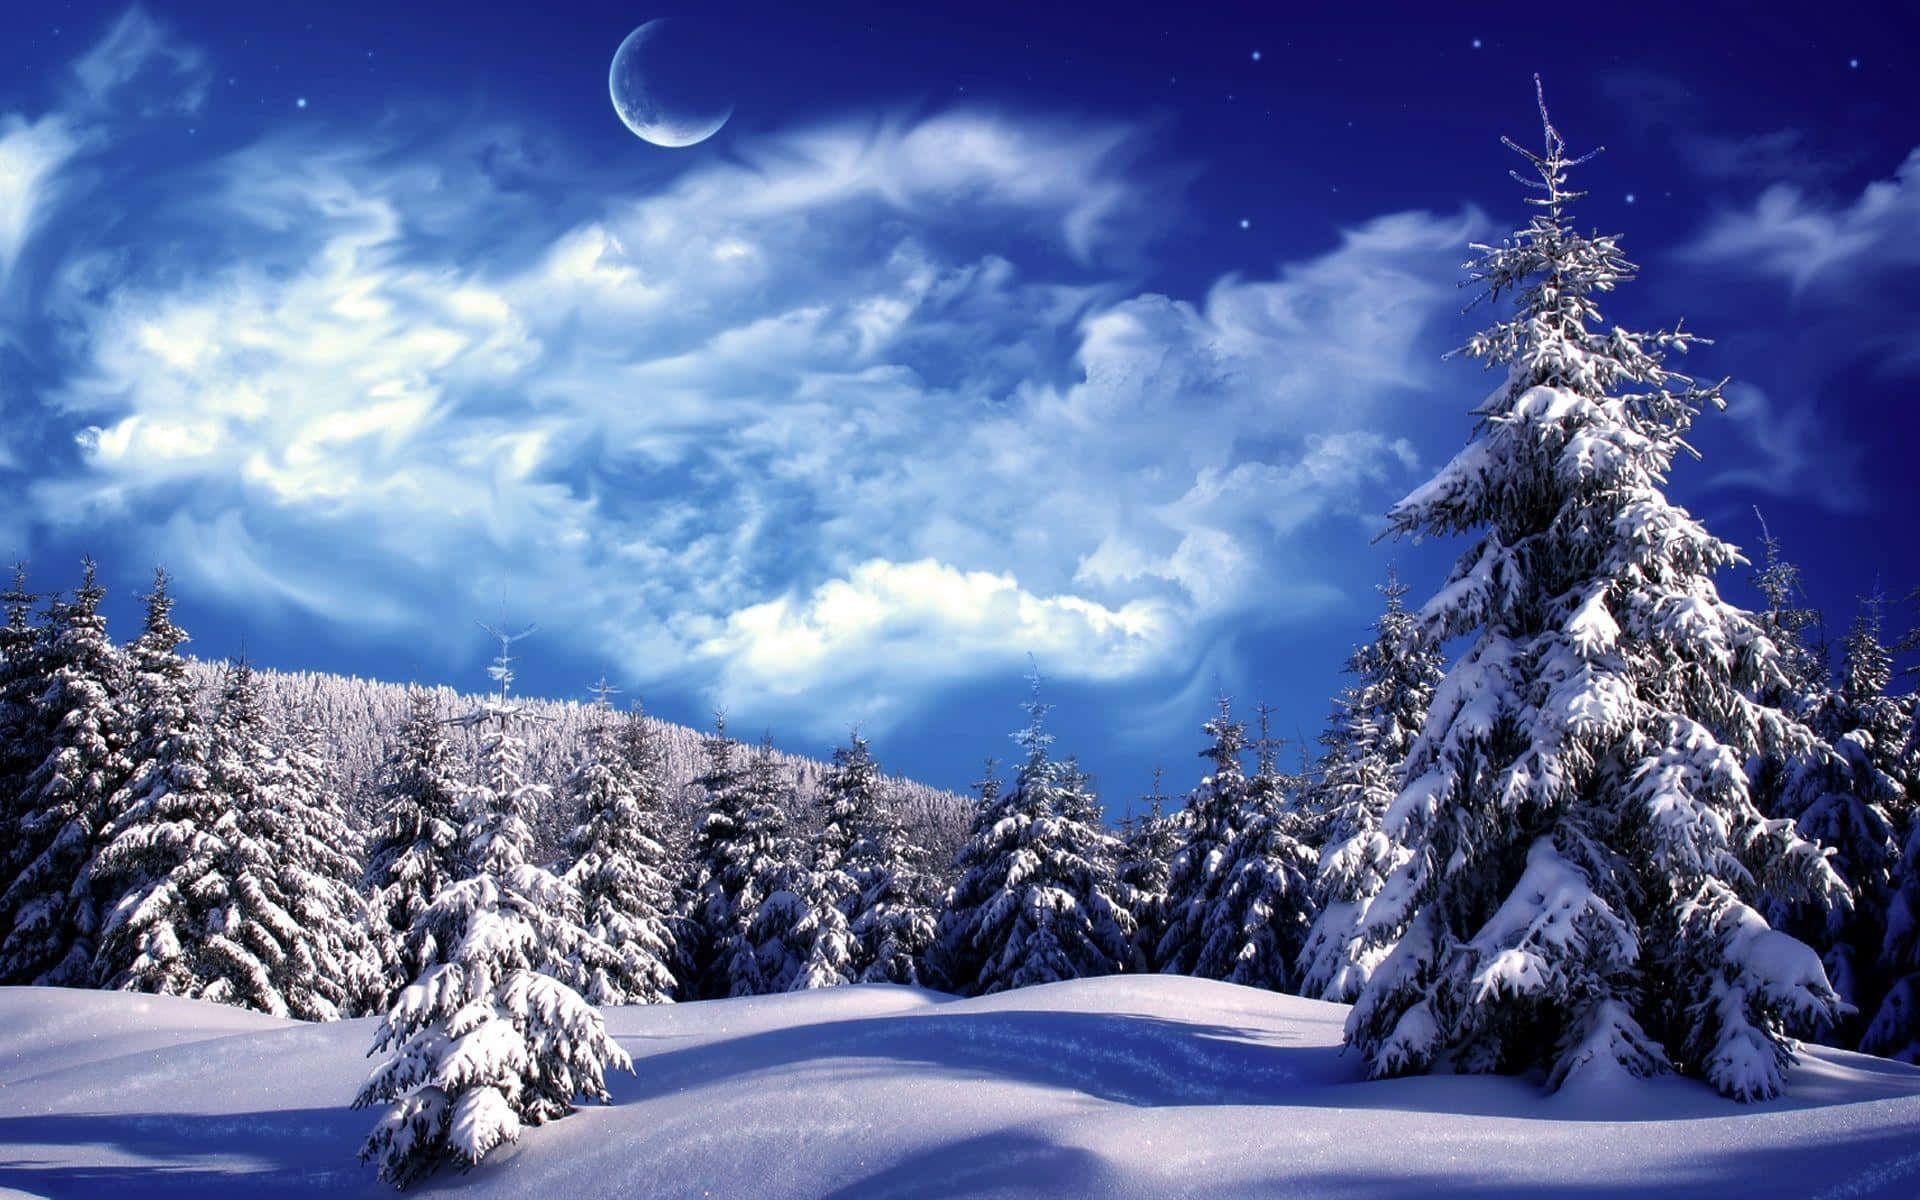 Enjoy the beauty of a winter wonderland.